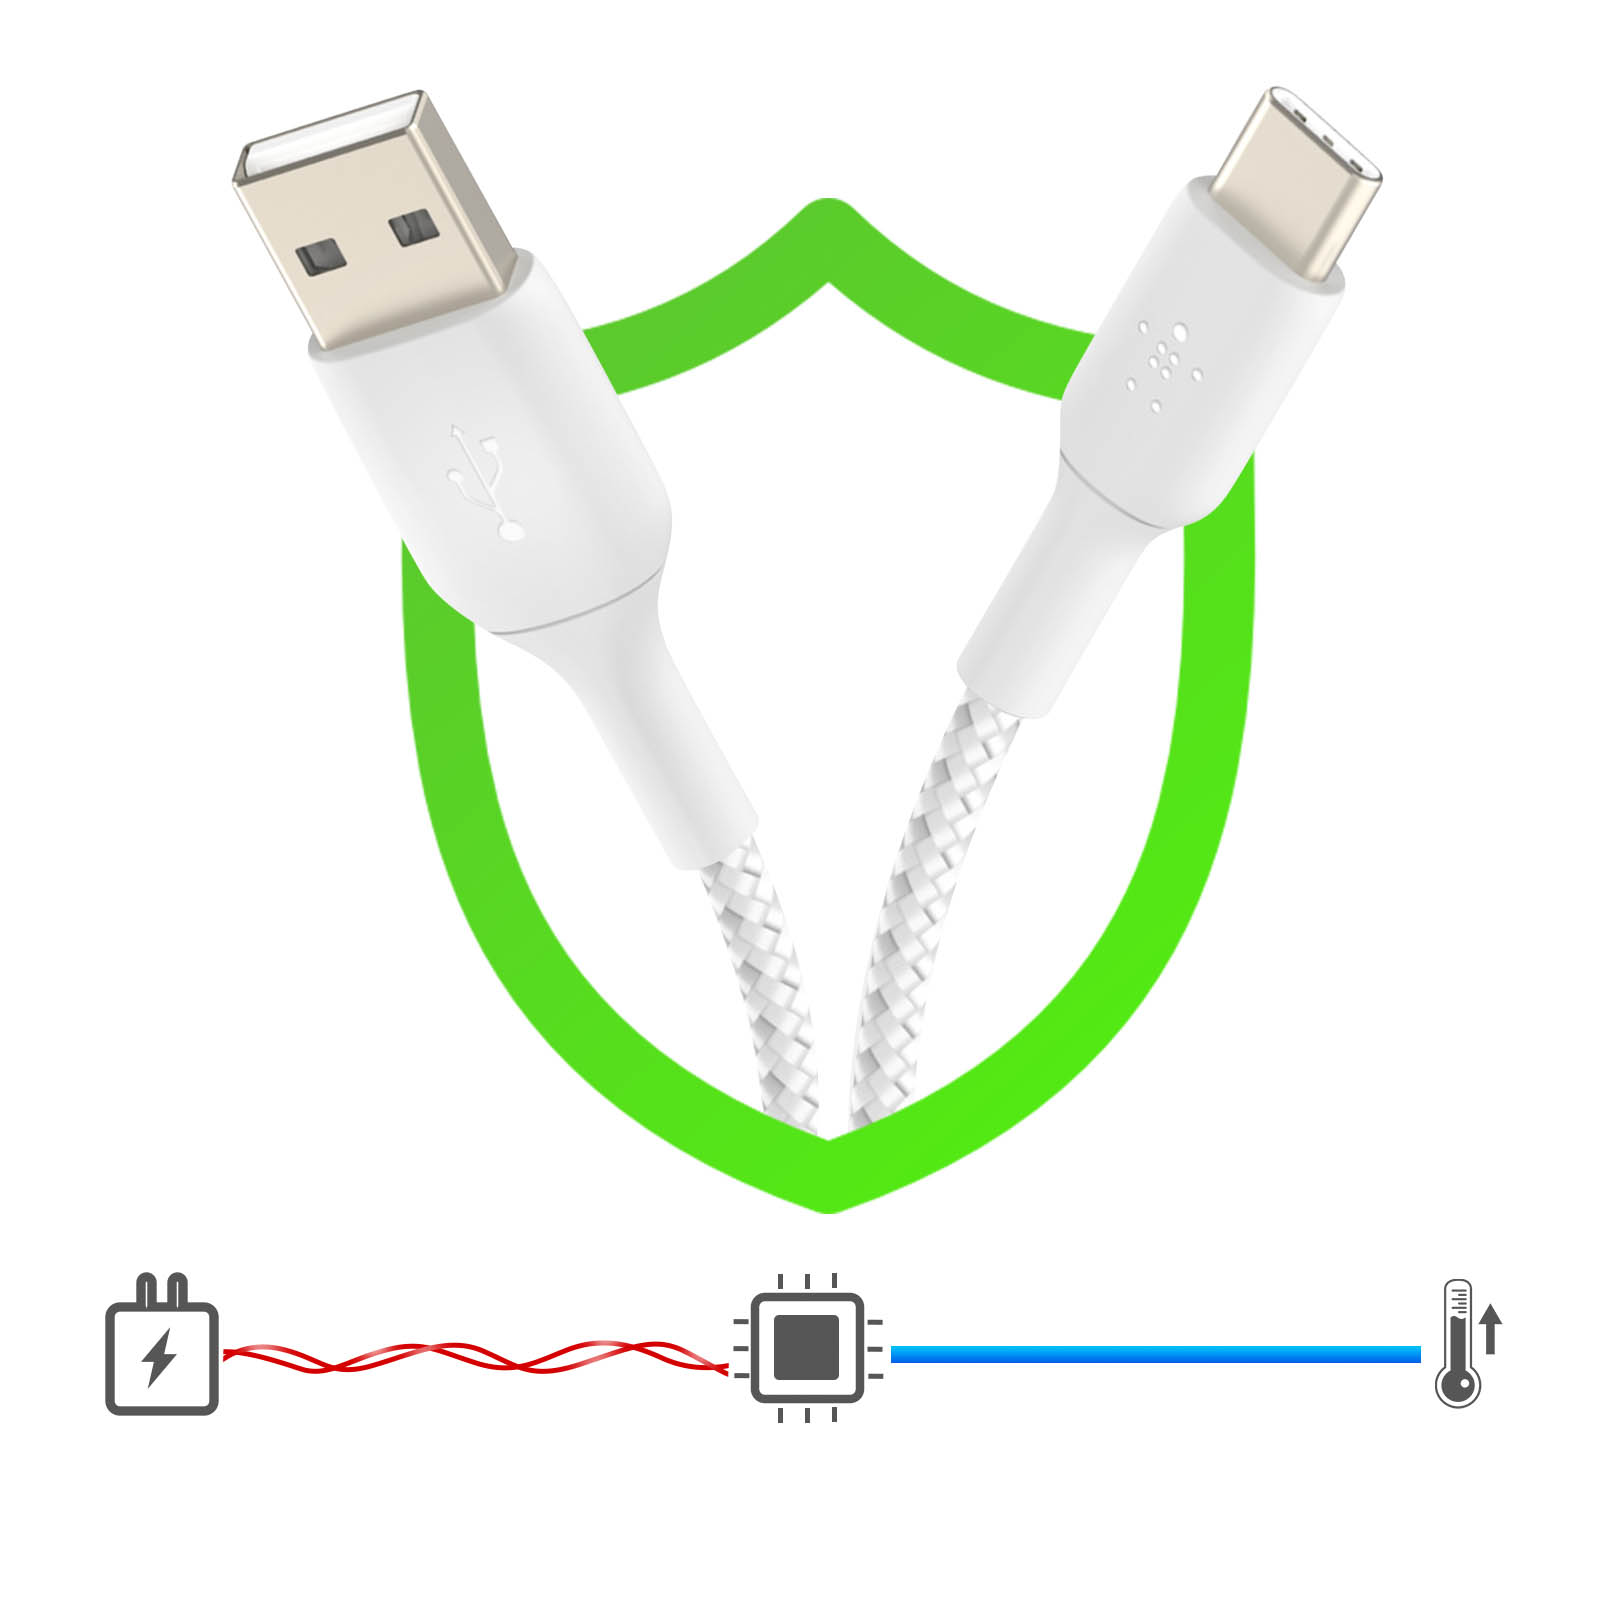 BELKIN USB / USB-C Nylonkabel USB-Kabel